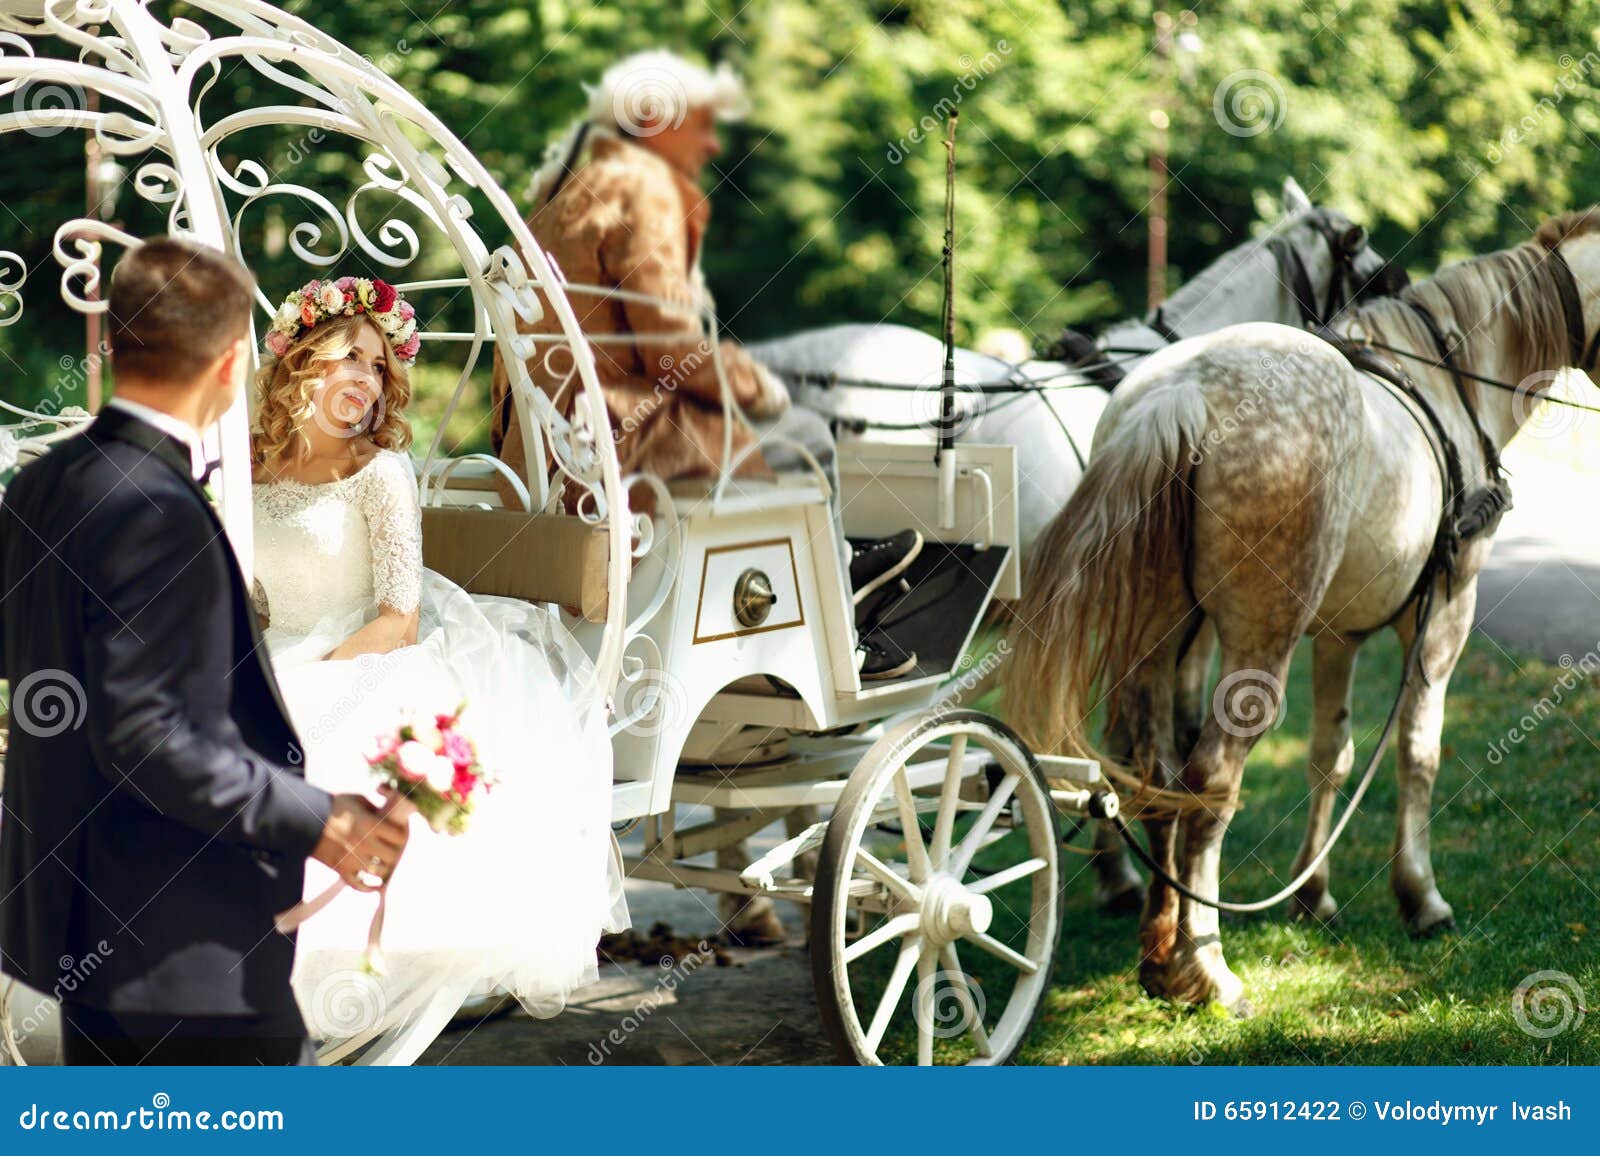 fairy-tale cinderella wedding carriage and horse magical wedding